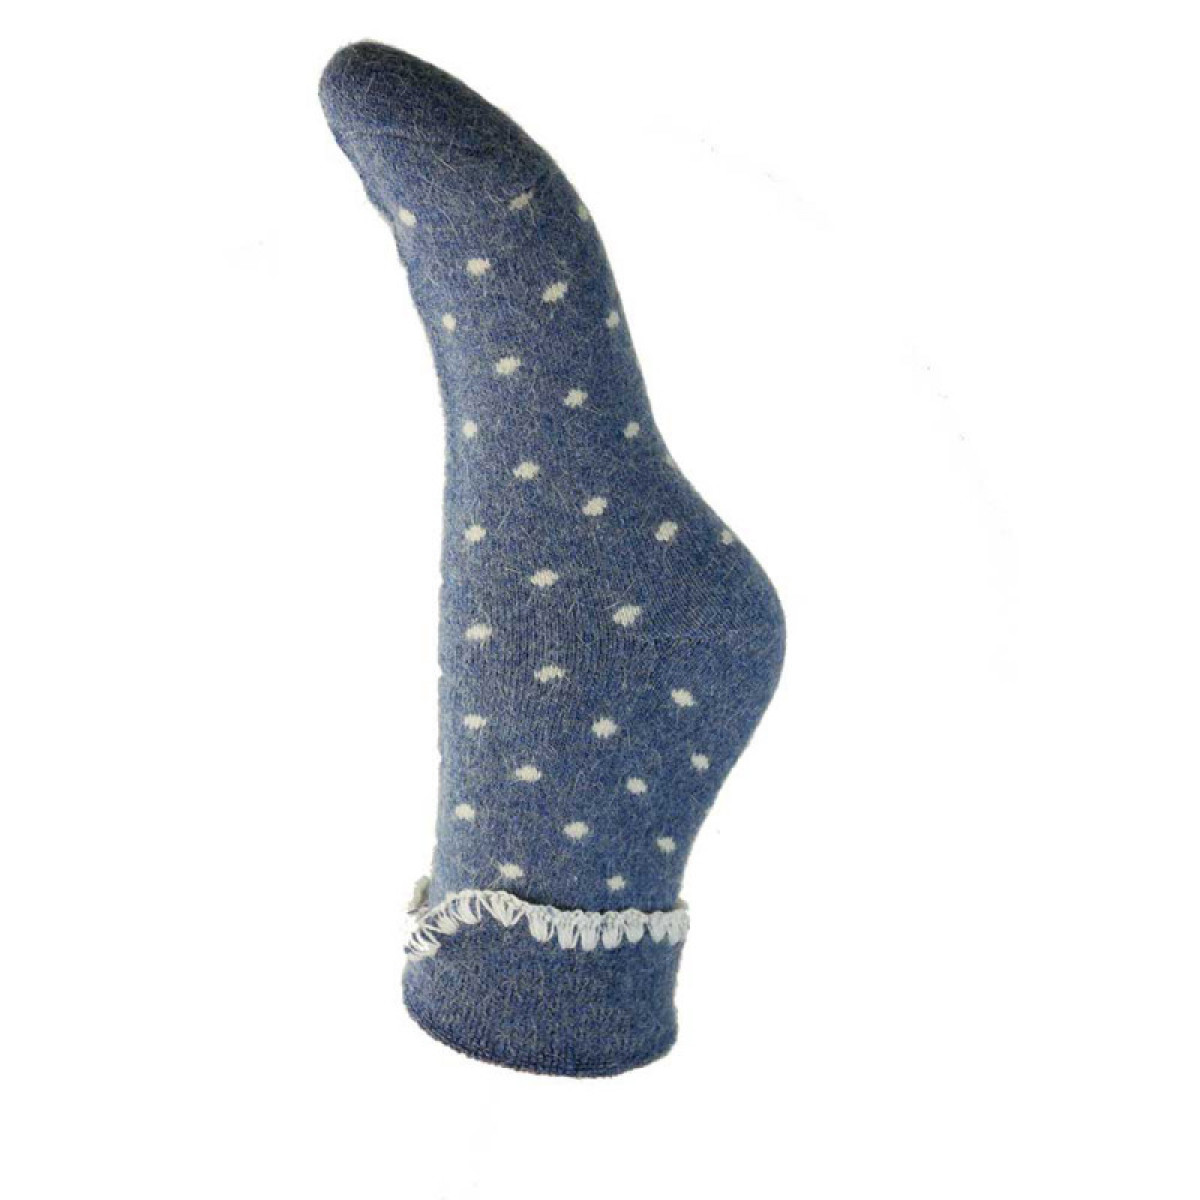 Joya Blue With Cream Dots Cuff Socks